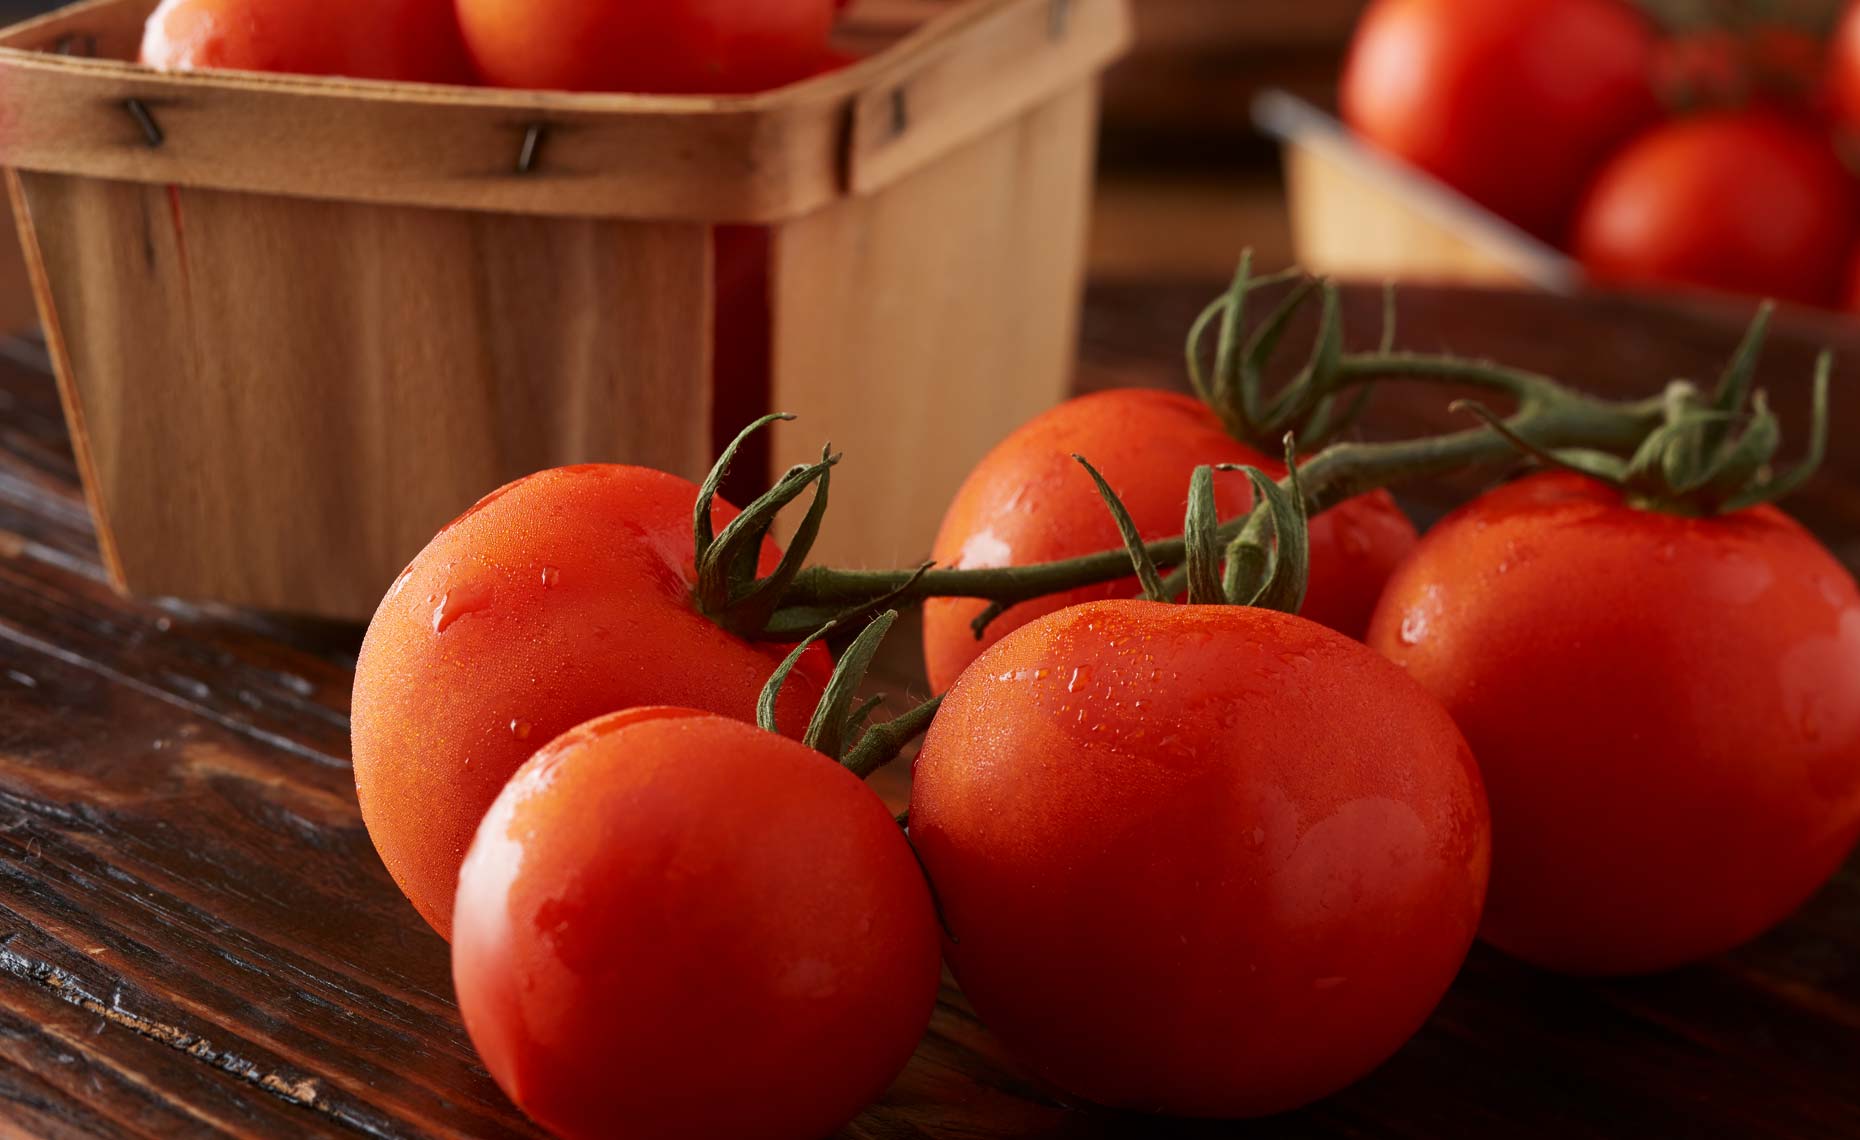 Tomatoe-n-Basket